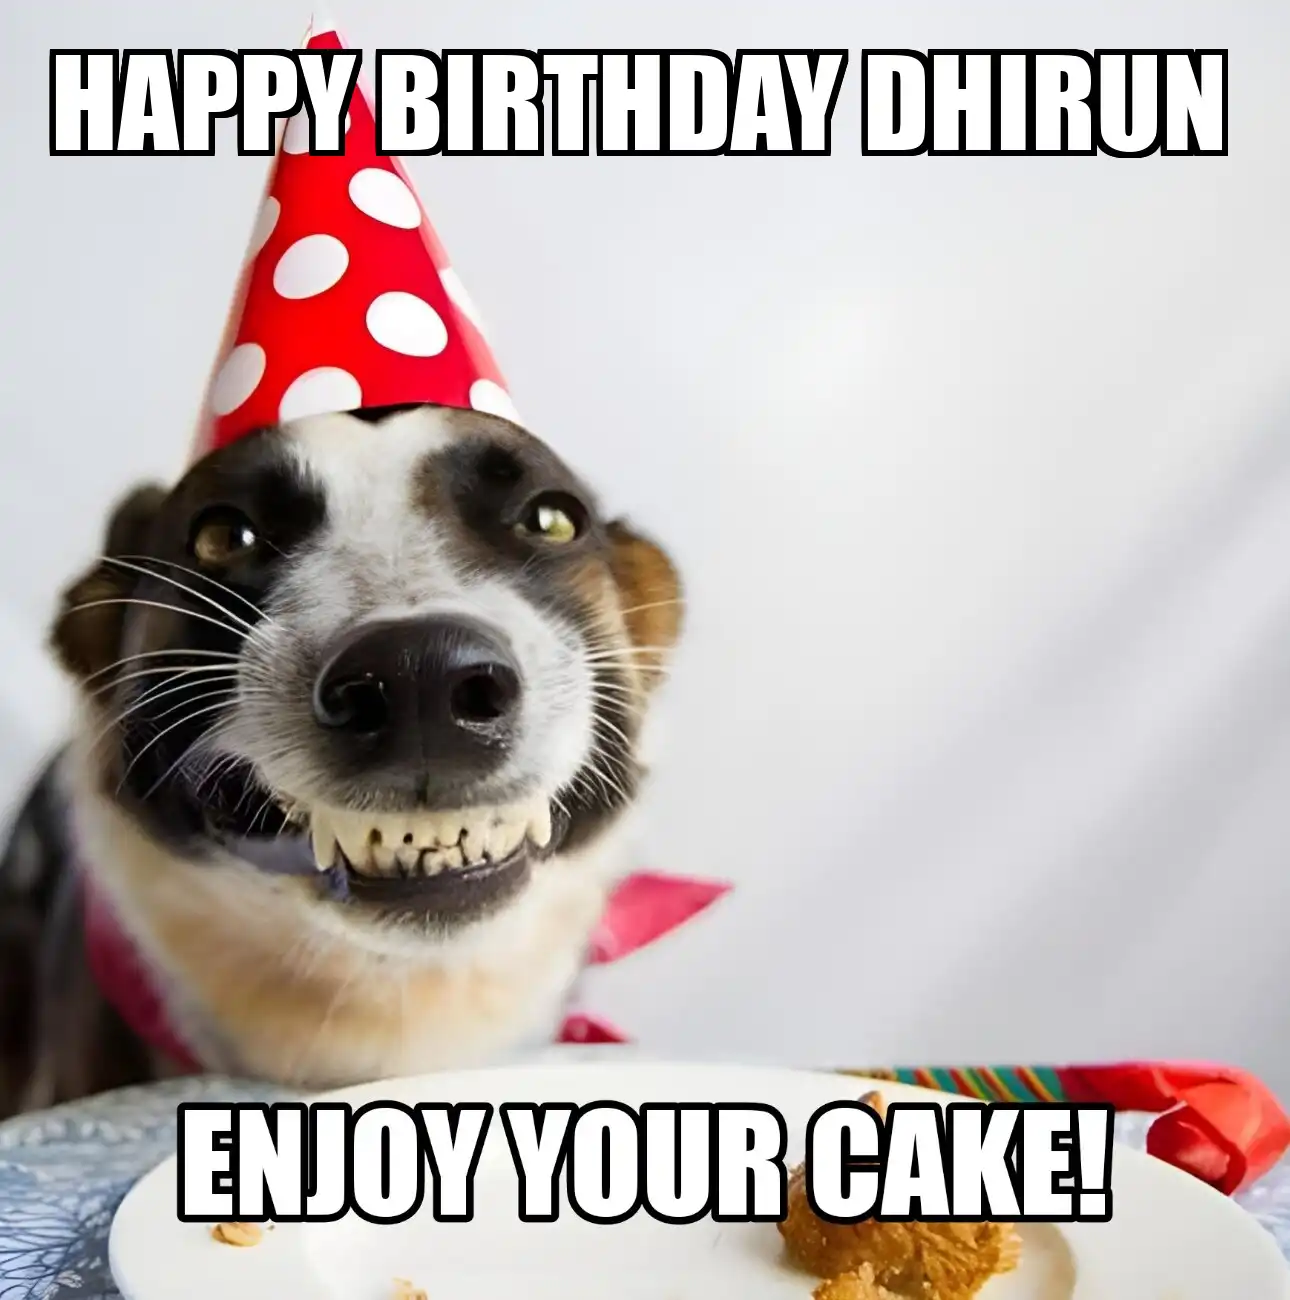 Happy Birthday Dhirun Enjoy Your Cake Dog Meme